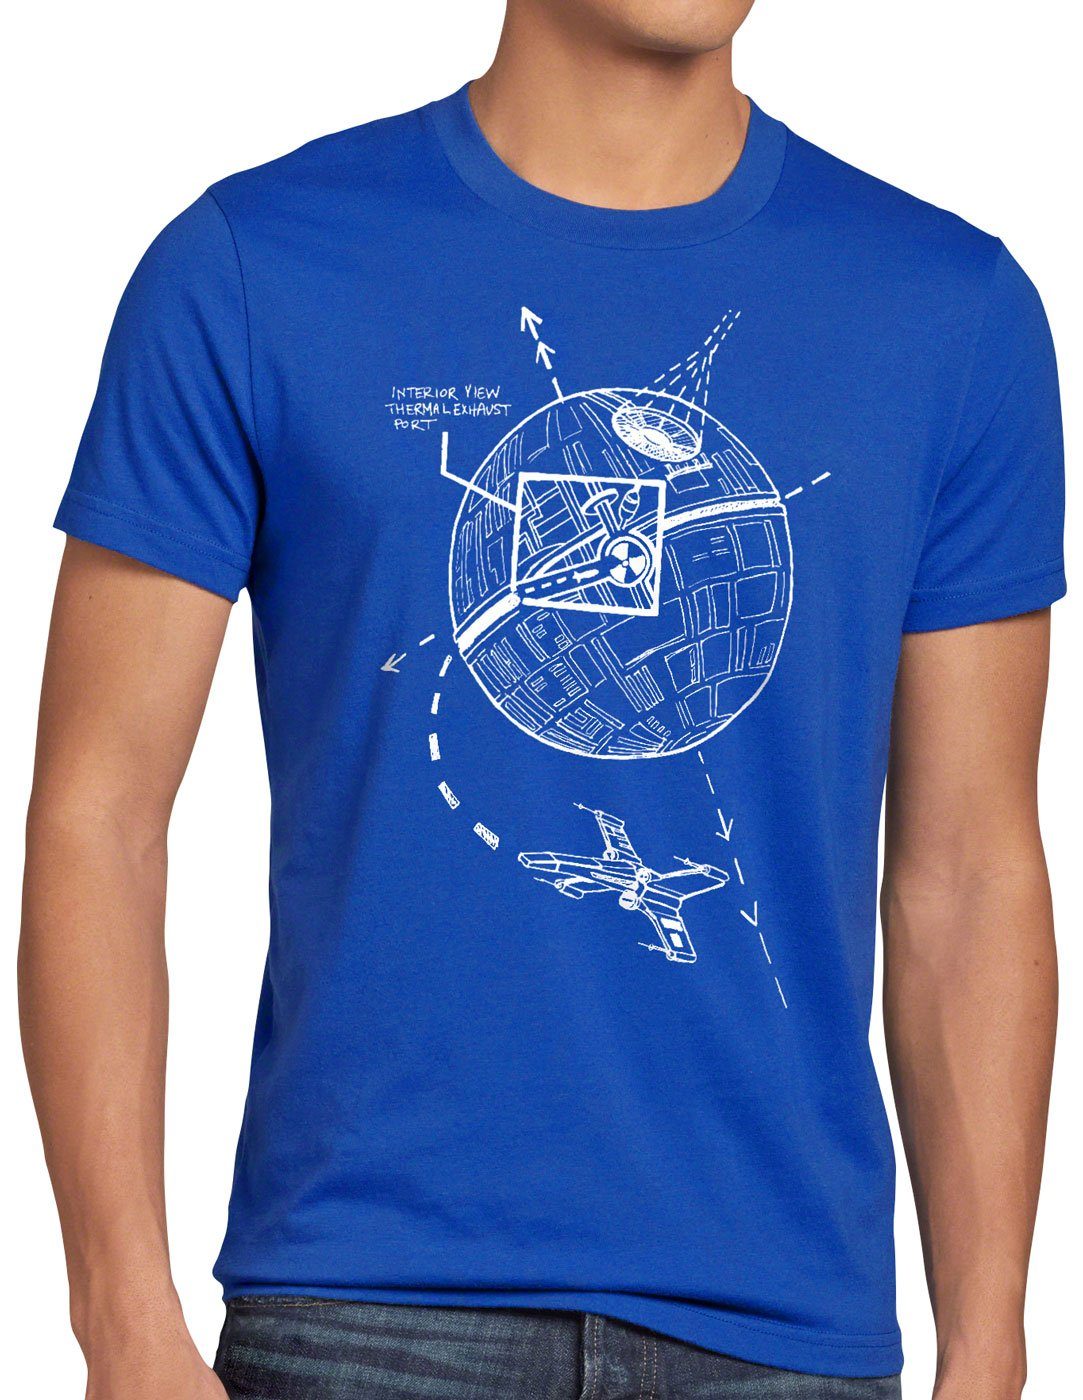 Print-Shirt T-Shirt Herren Lüftungsschacht todesstern imperium angriff style3 blau